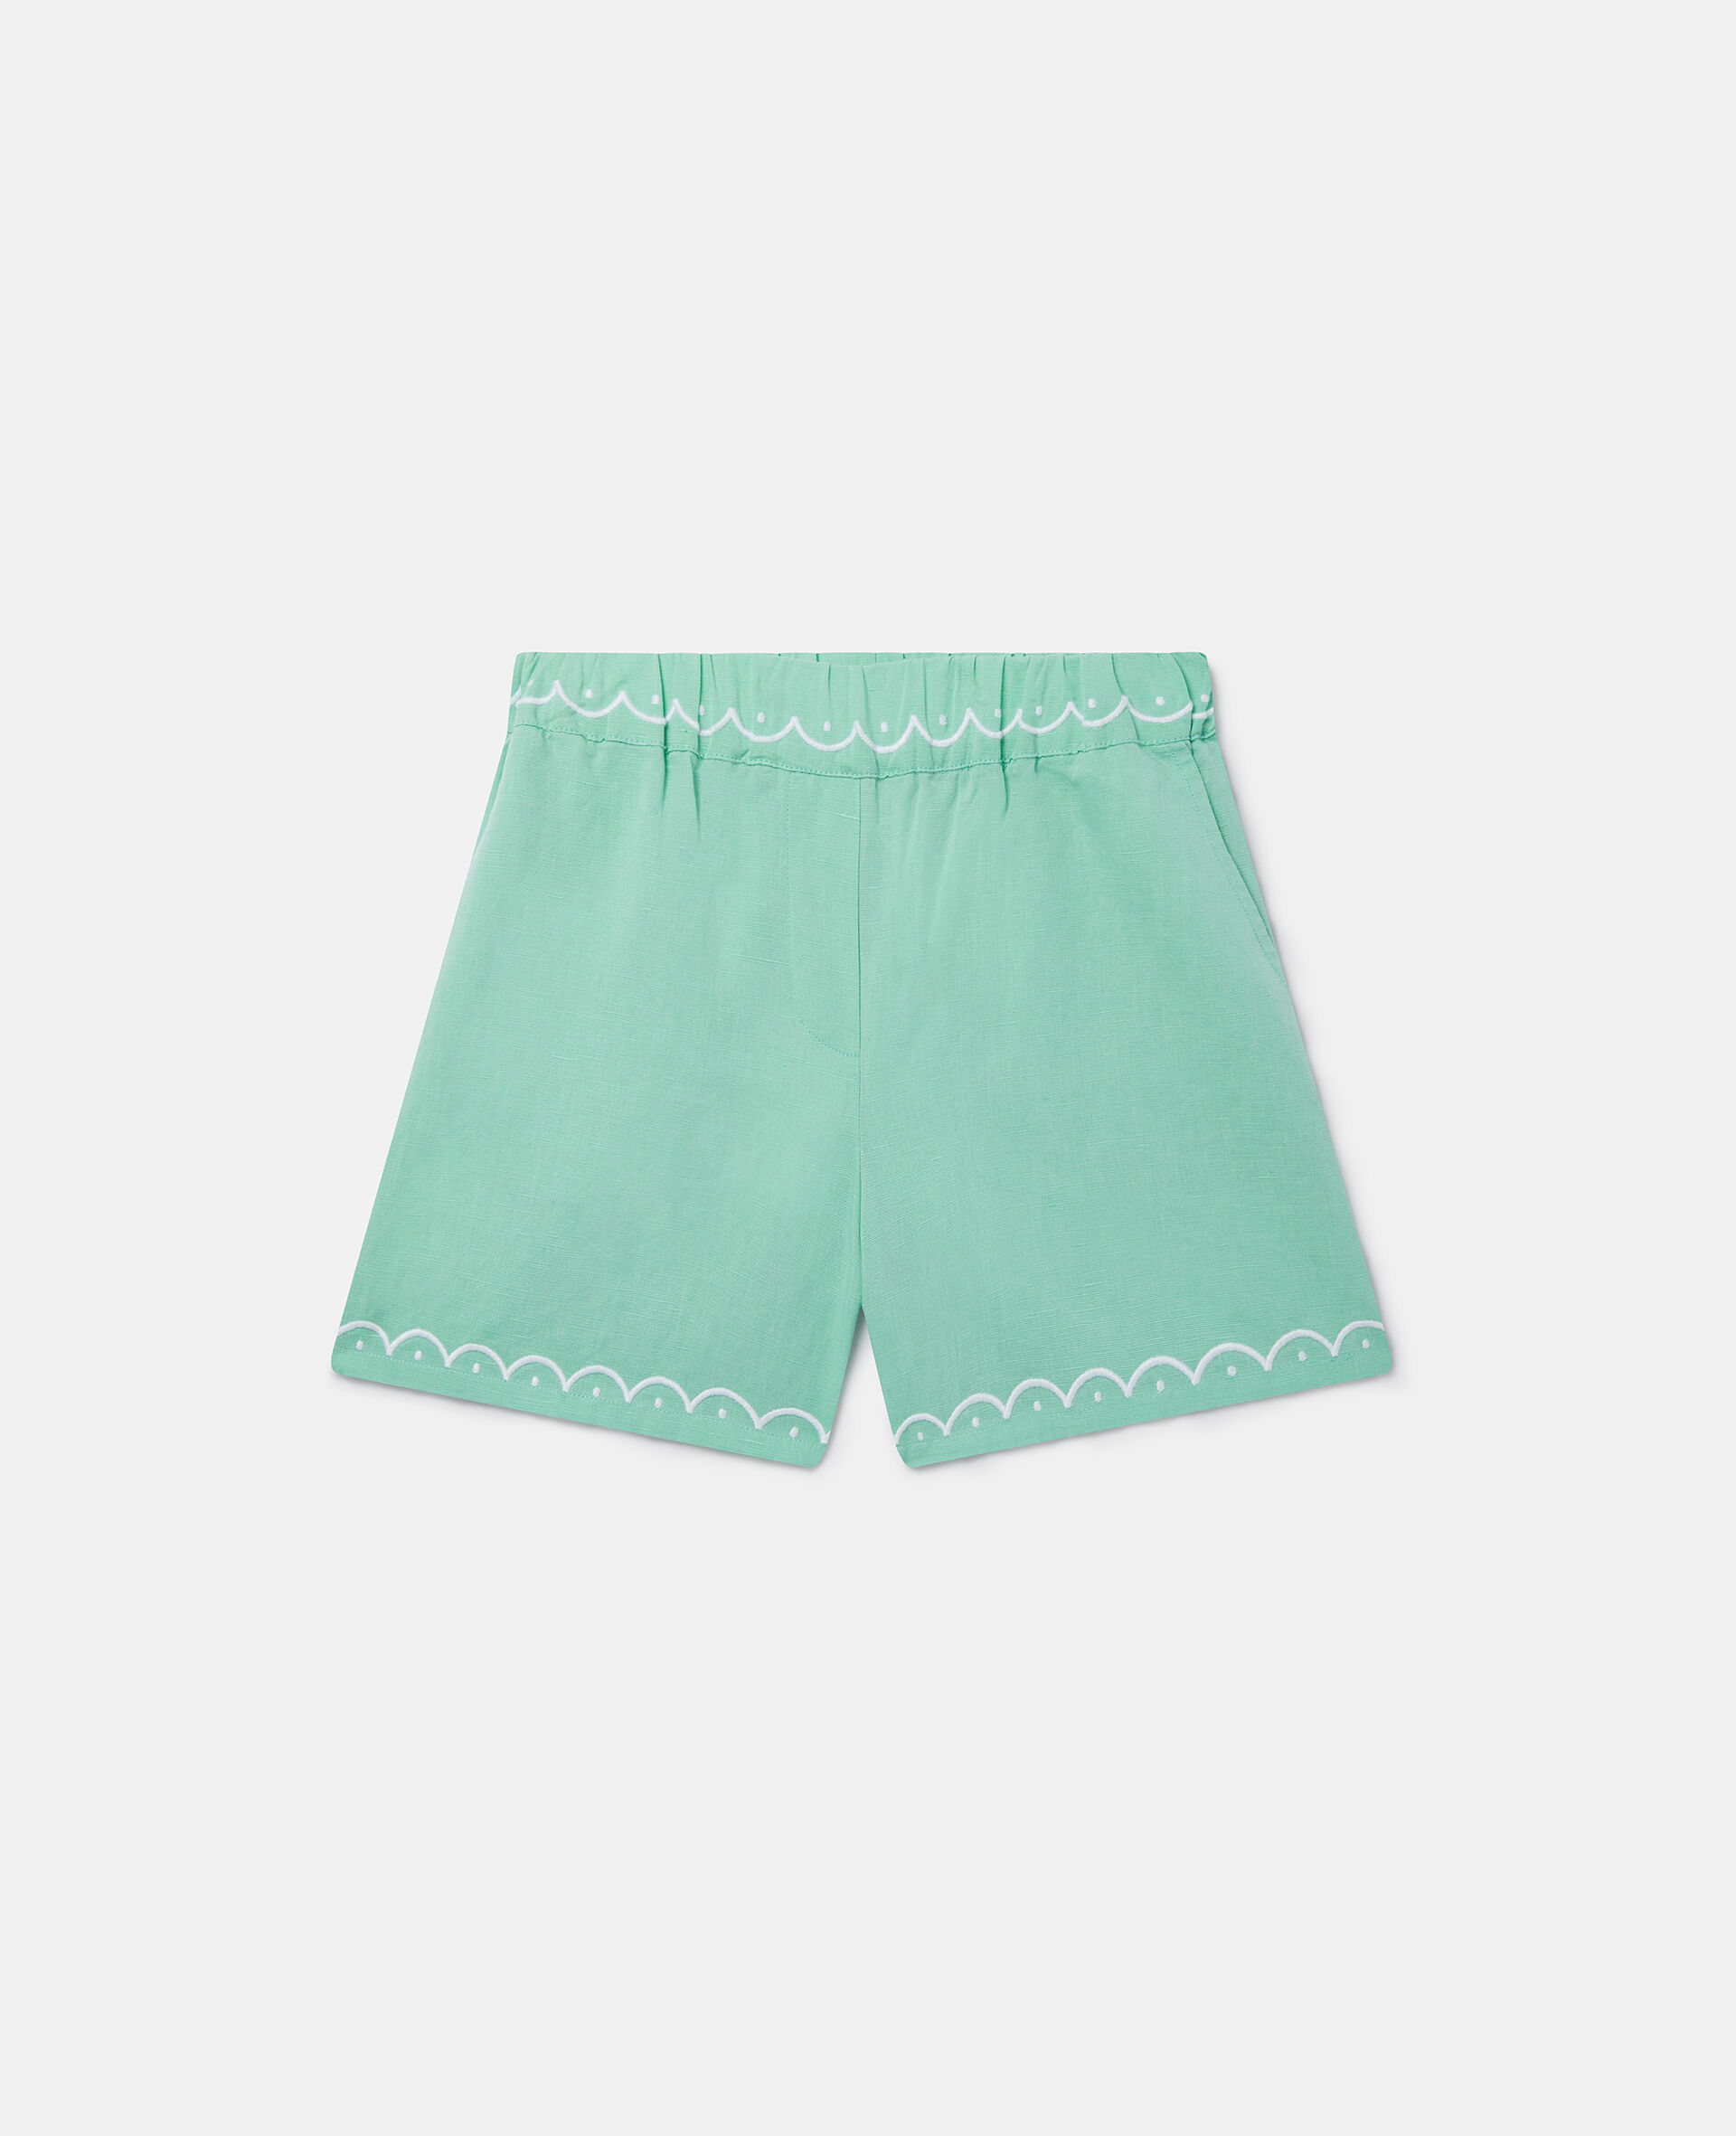 Scalloped Edge Shorts-Green-large image number 0